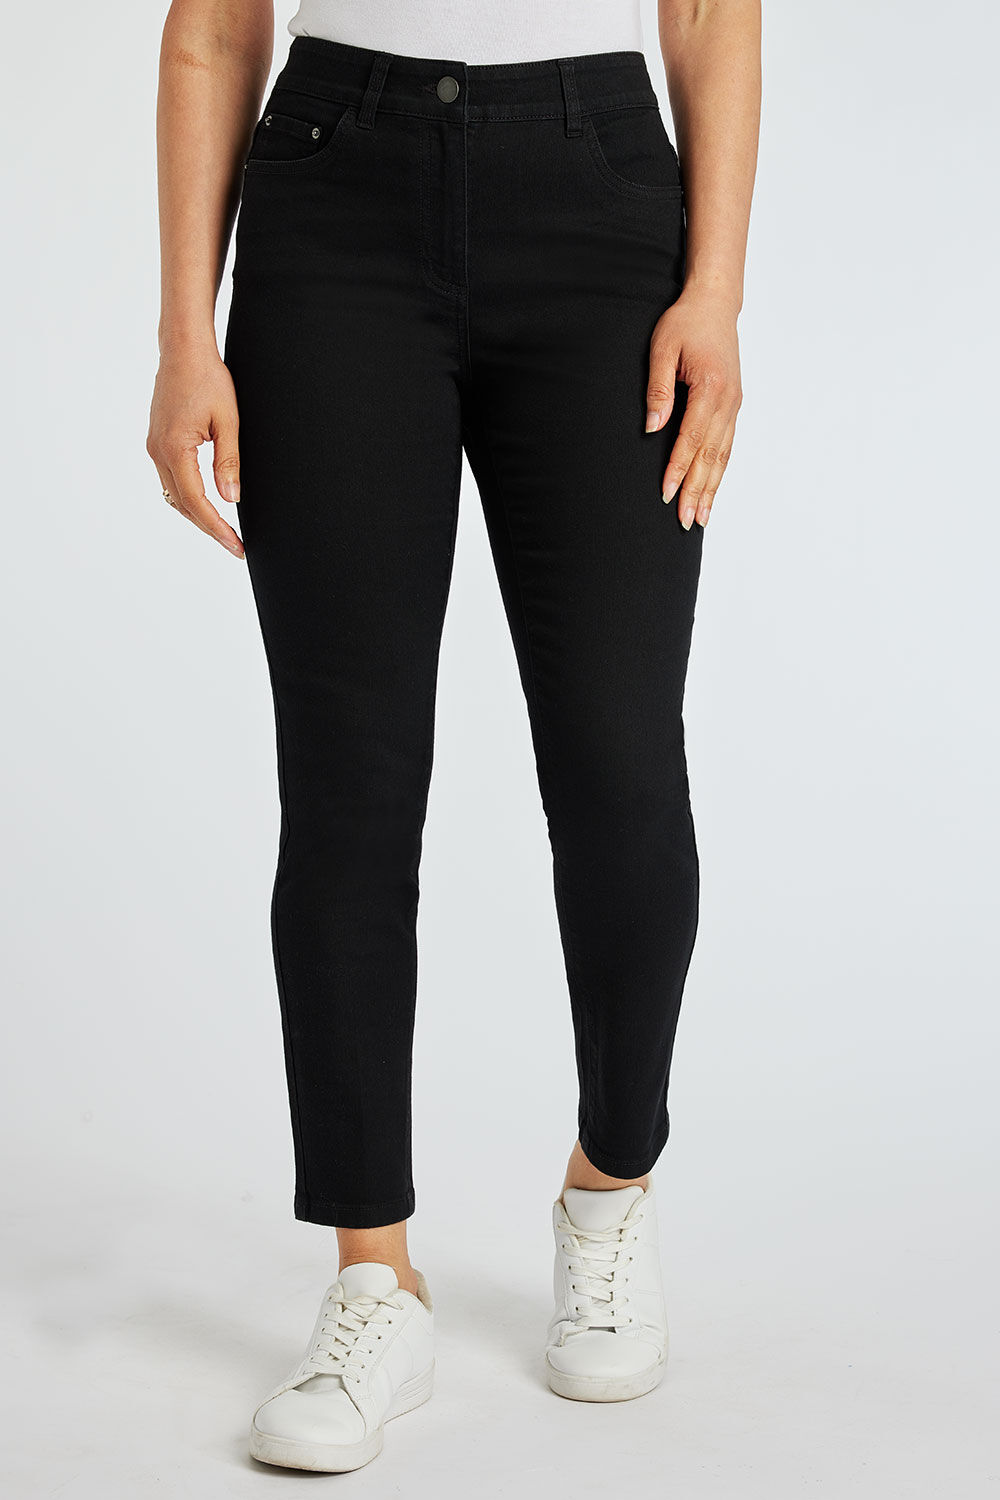 Bonmarche Women’s Black Cotton Casual The SUSIE Slim Leg Jeans, Size: 16